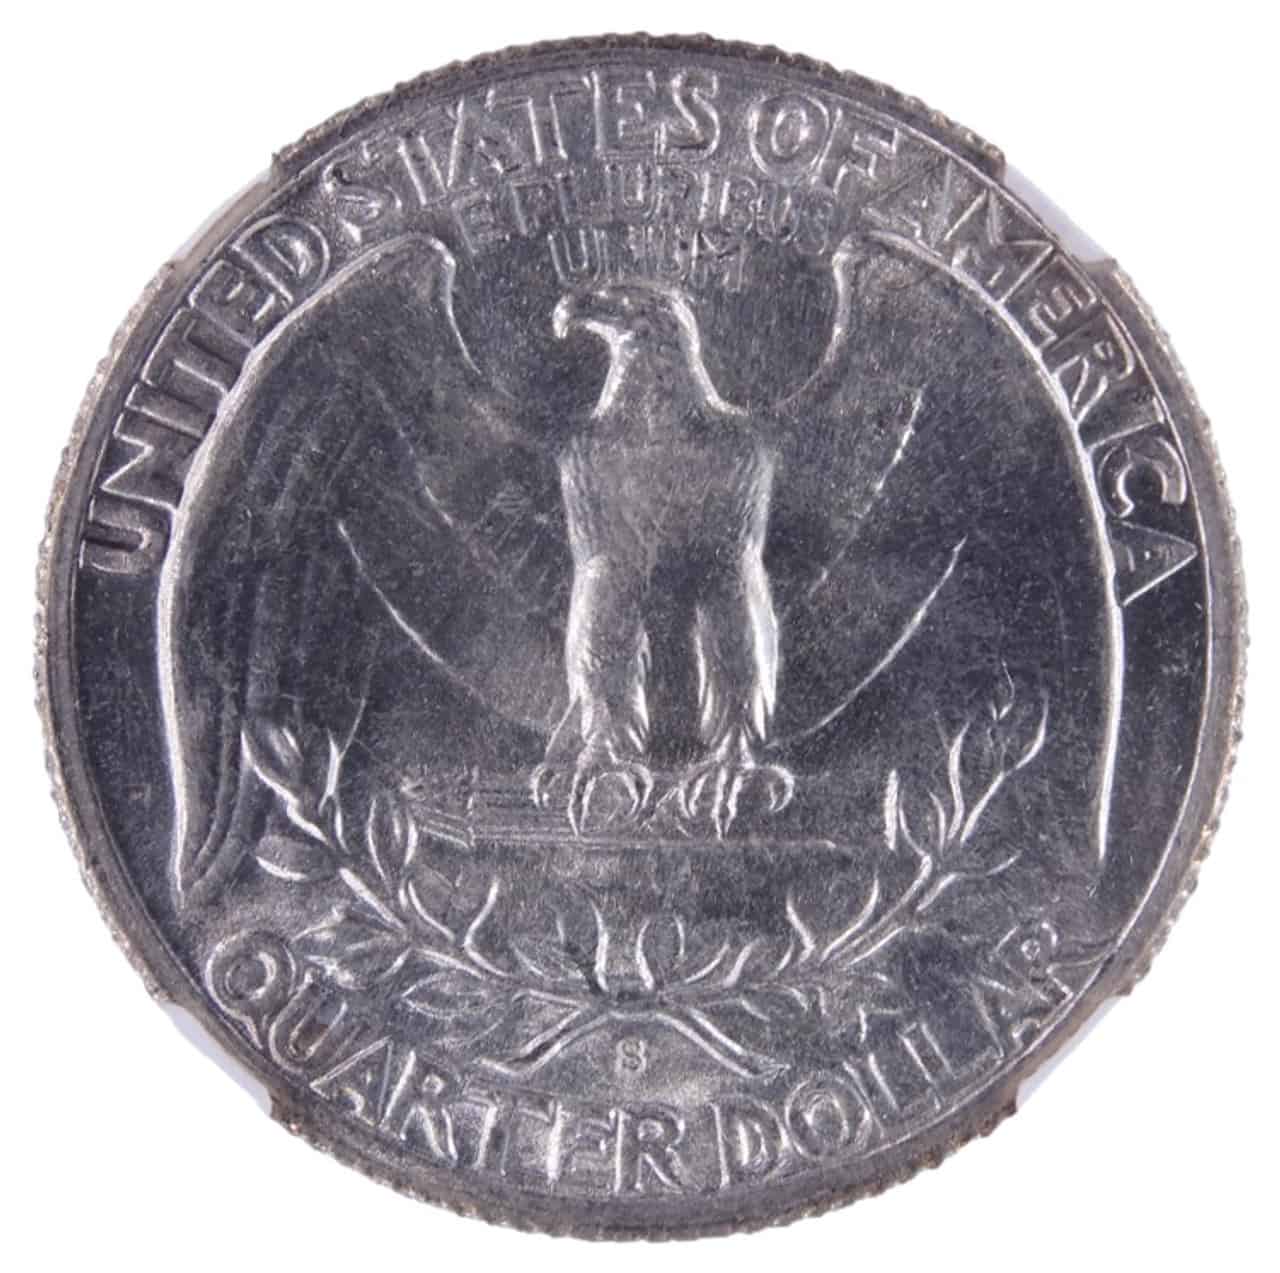 The Reverse of the 1941 Quarter